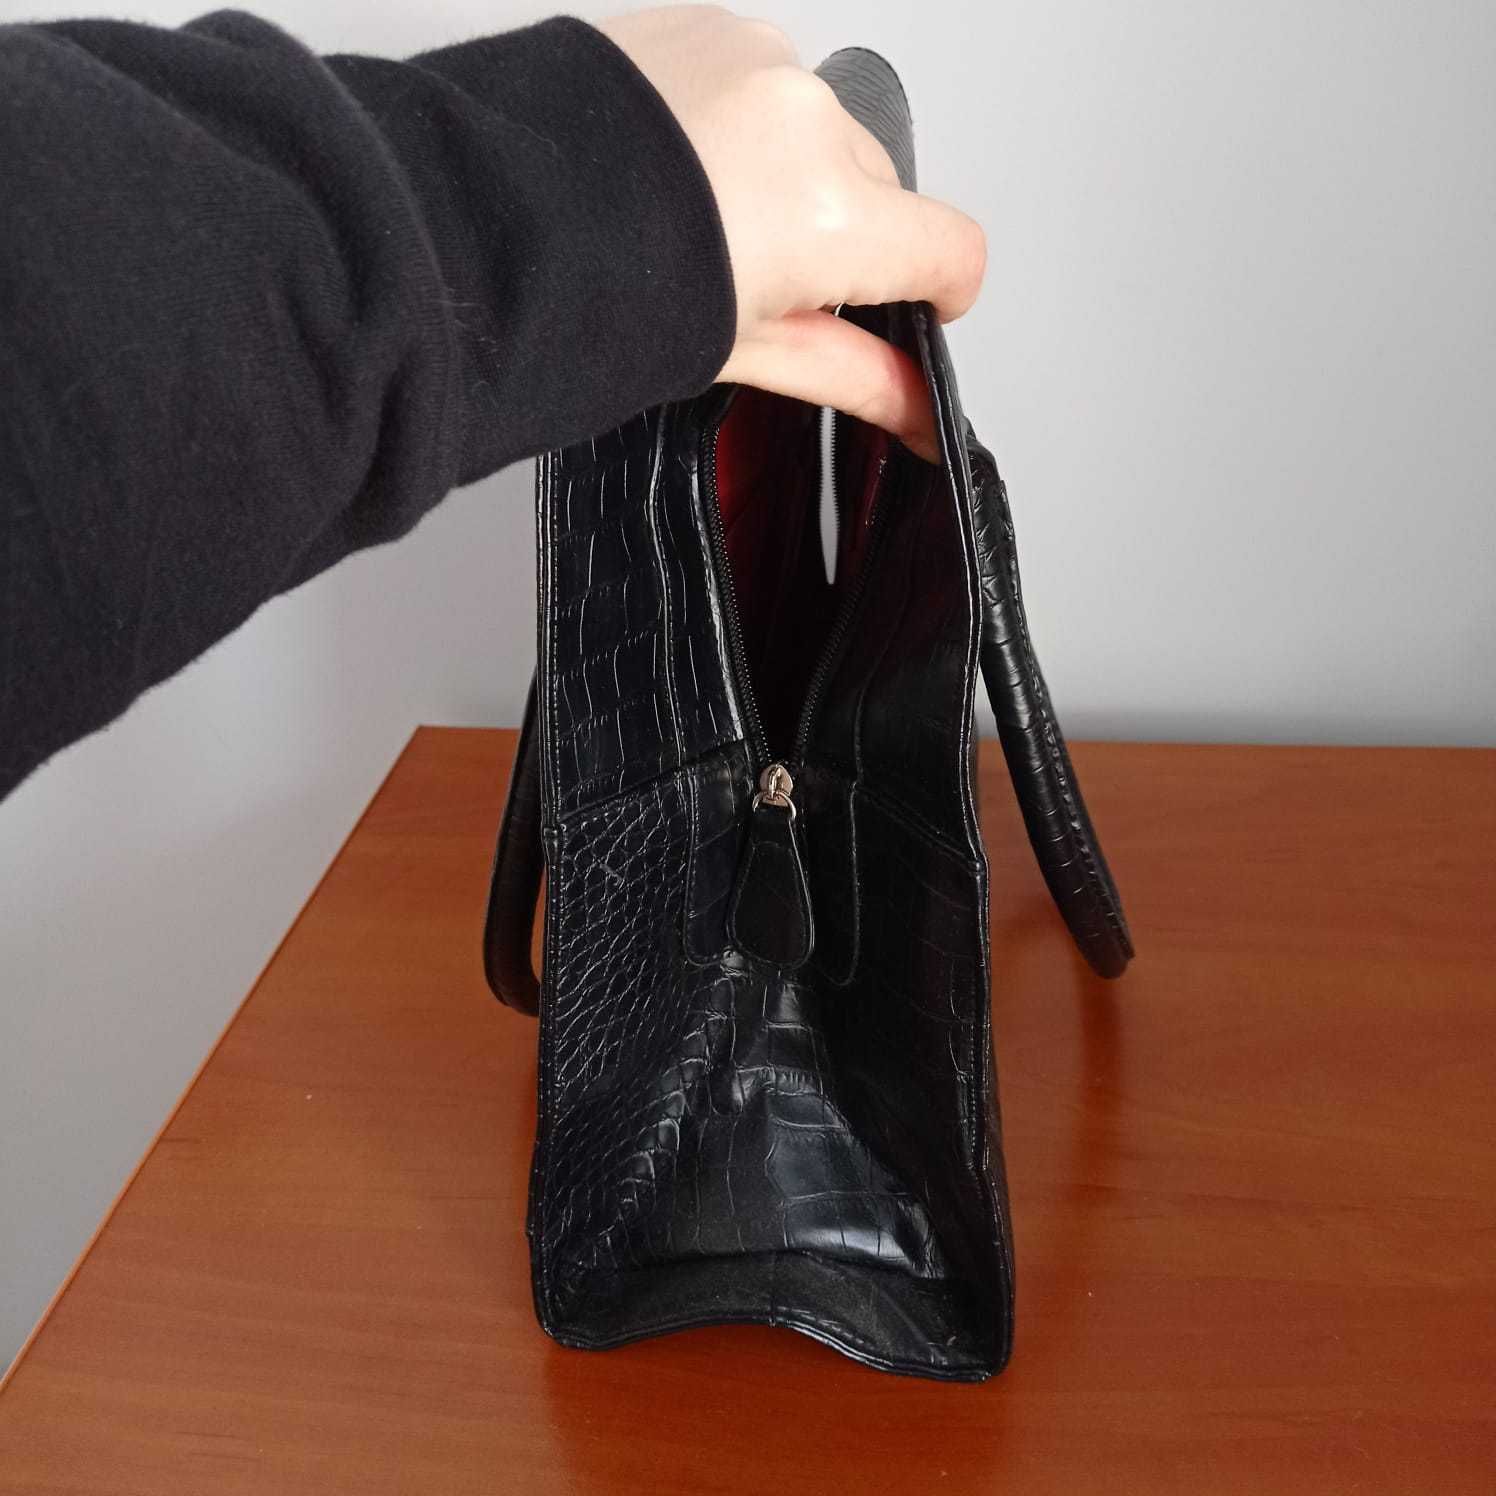 Torba torebka czarna elegancka shopper shopperka duża pojemna